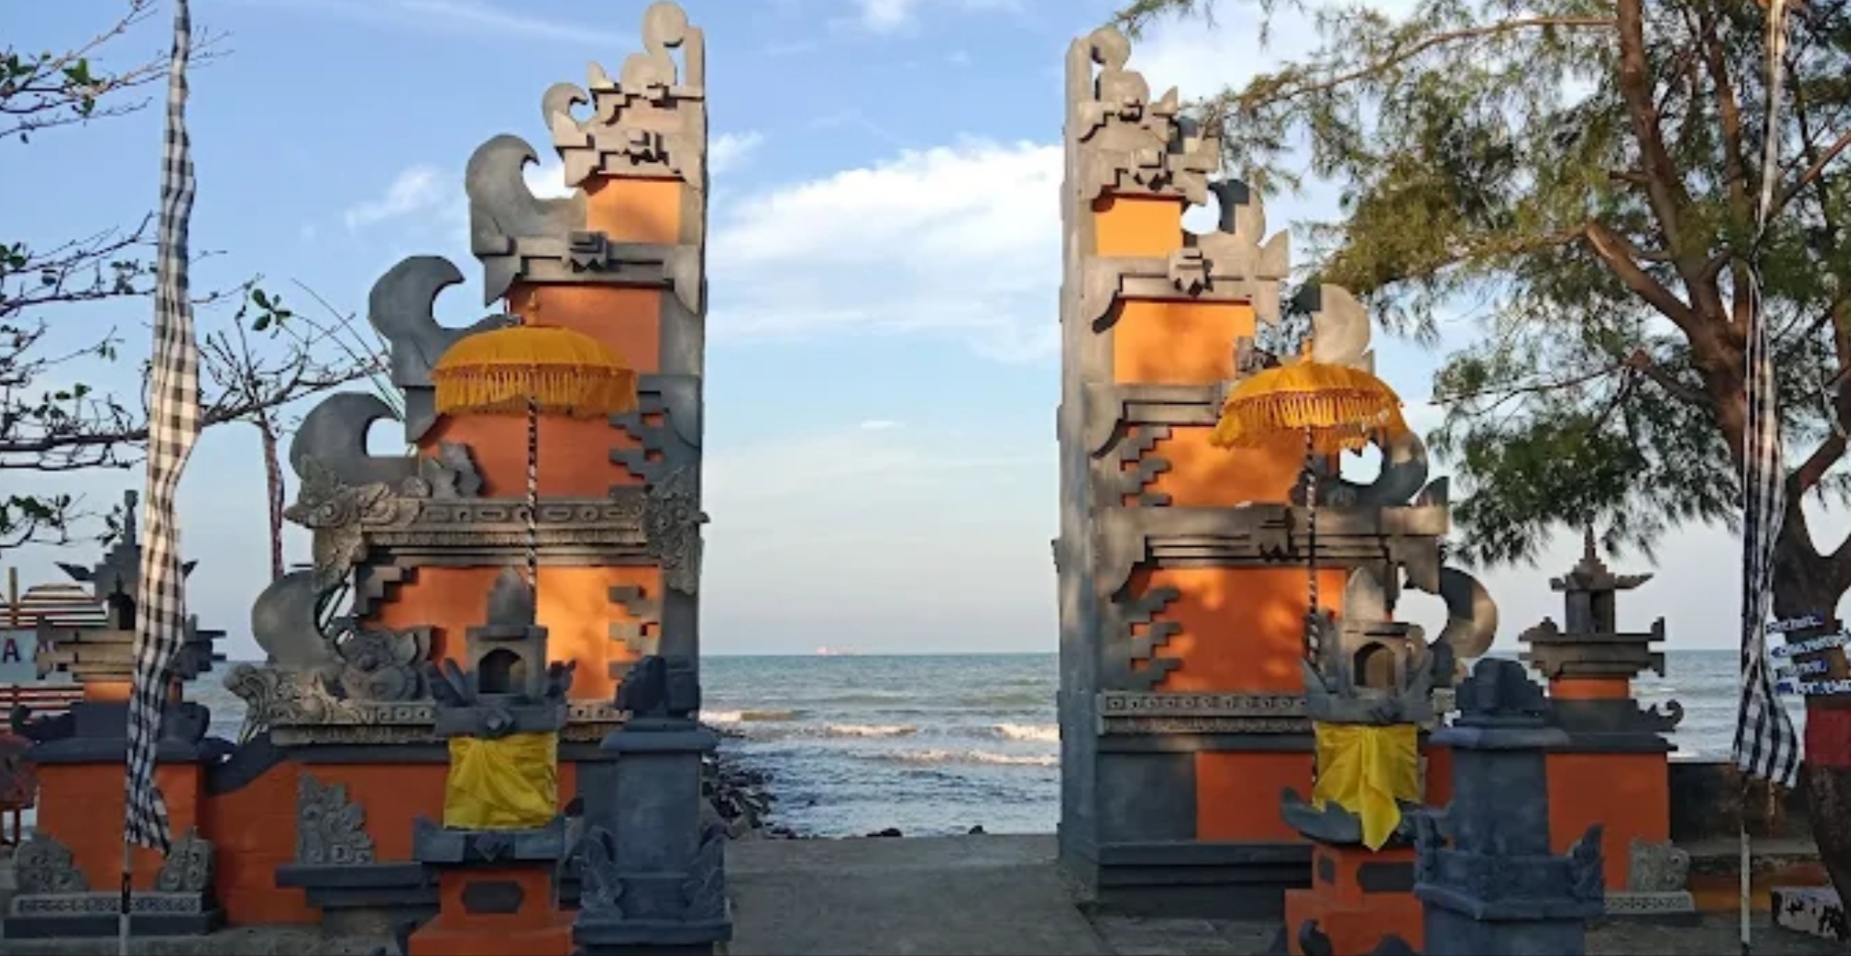 Nuansa Bali di Indramayu, Pantai Tirta Ayu Balongan, Lihat Foto Pasti Tertipu